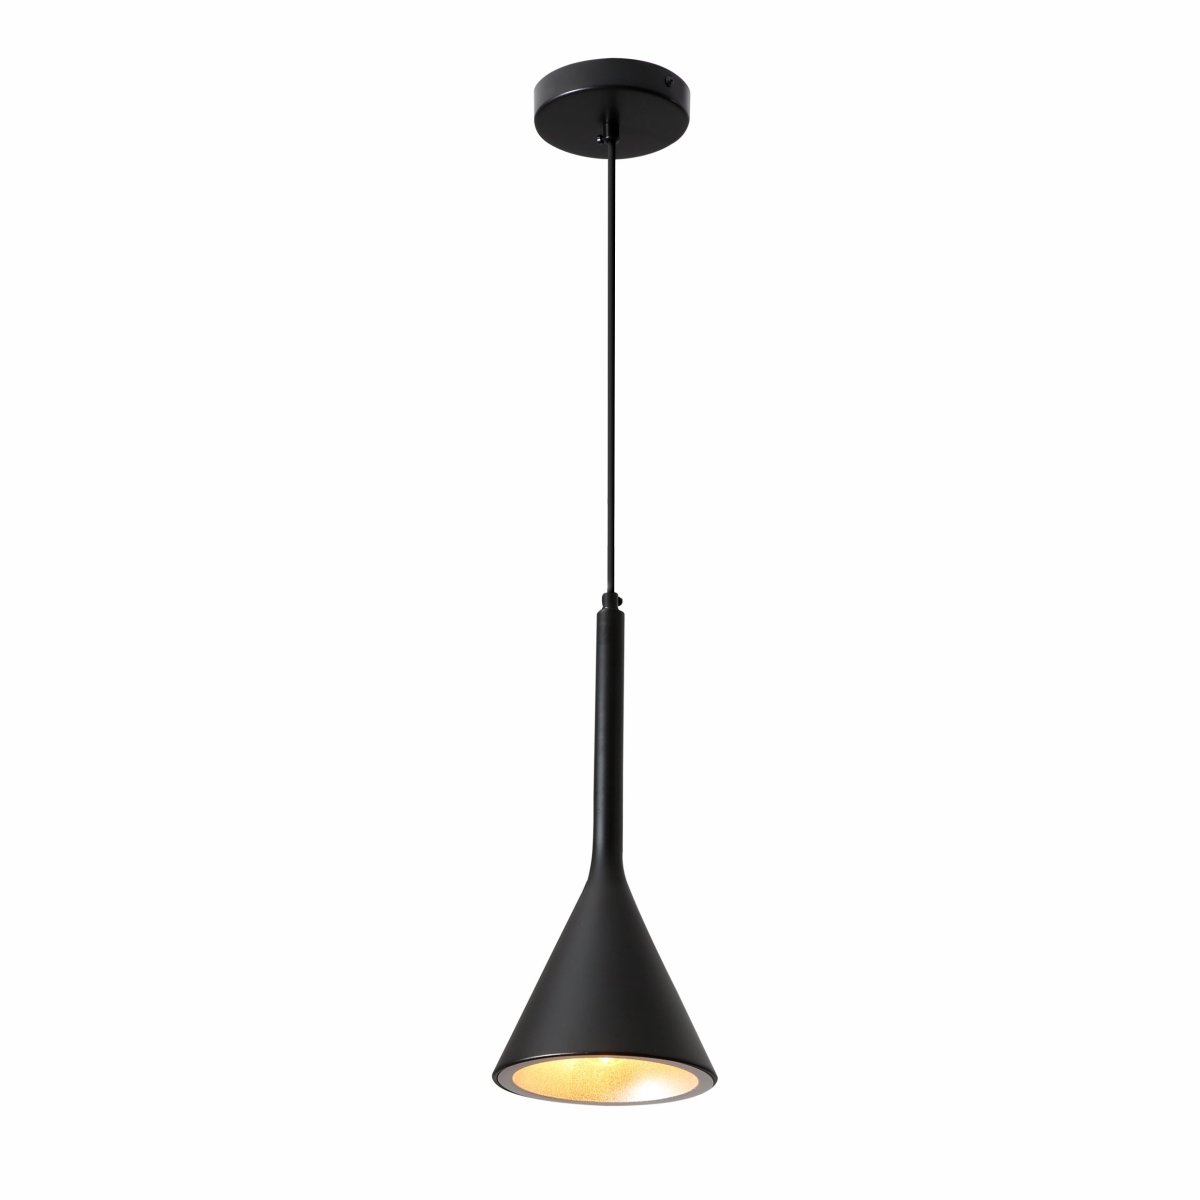 Main image of Black Funnel Nordic Modern Metal Ceiling Pendant Light with E27 Fitting | TEKLED 150-18394